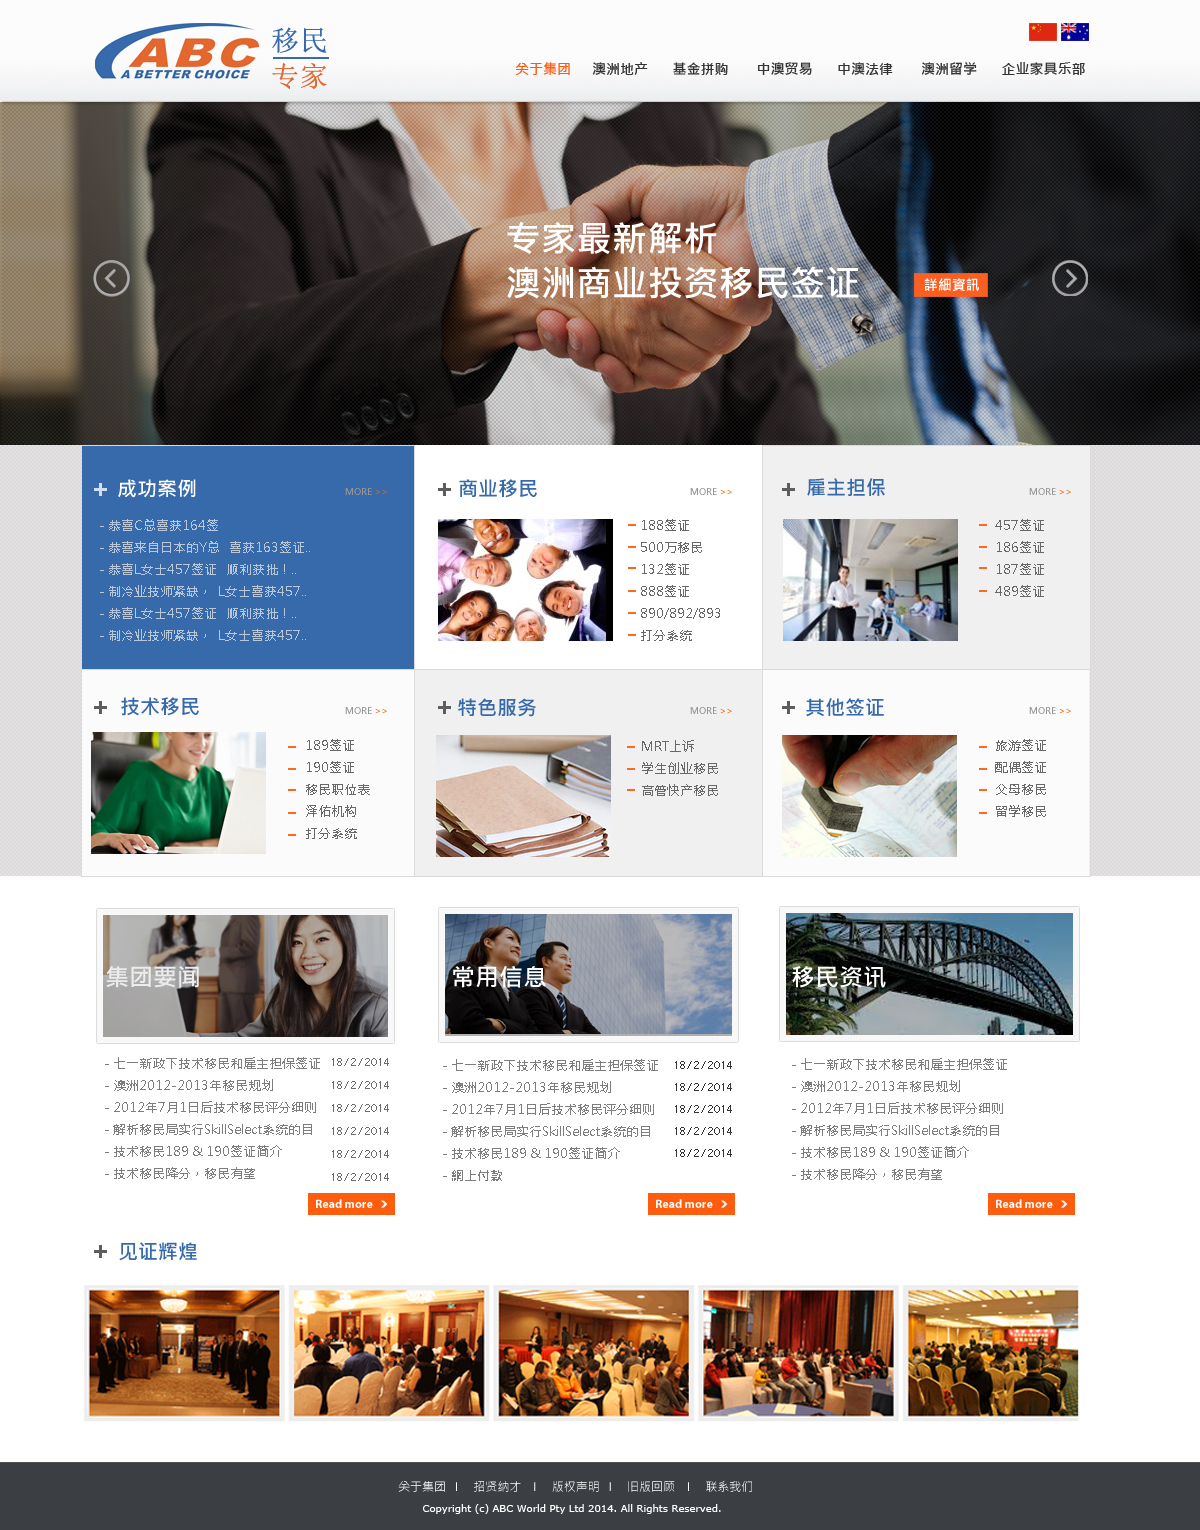 Web site design_homepage design_ABC website